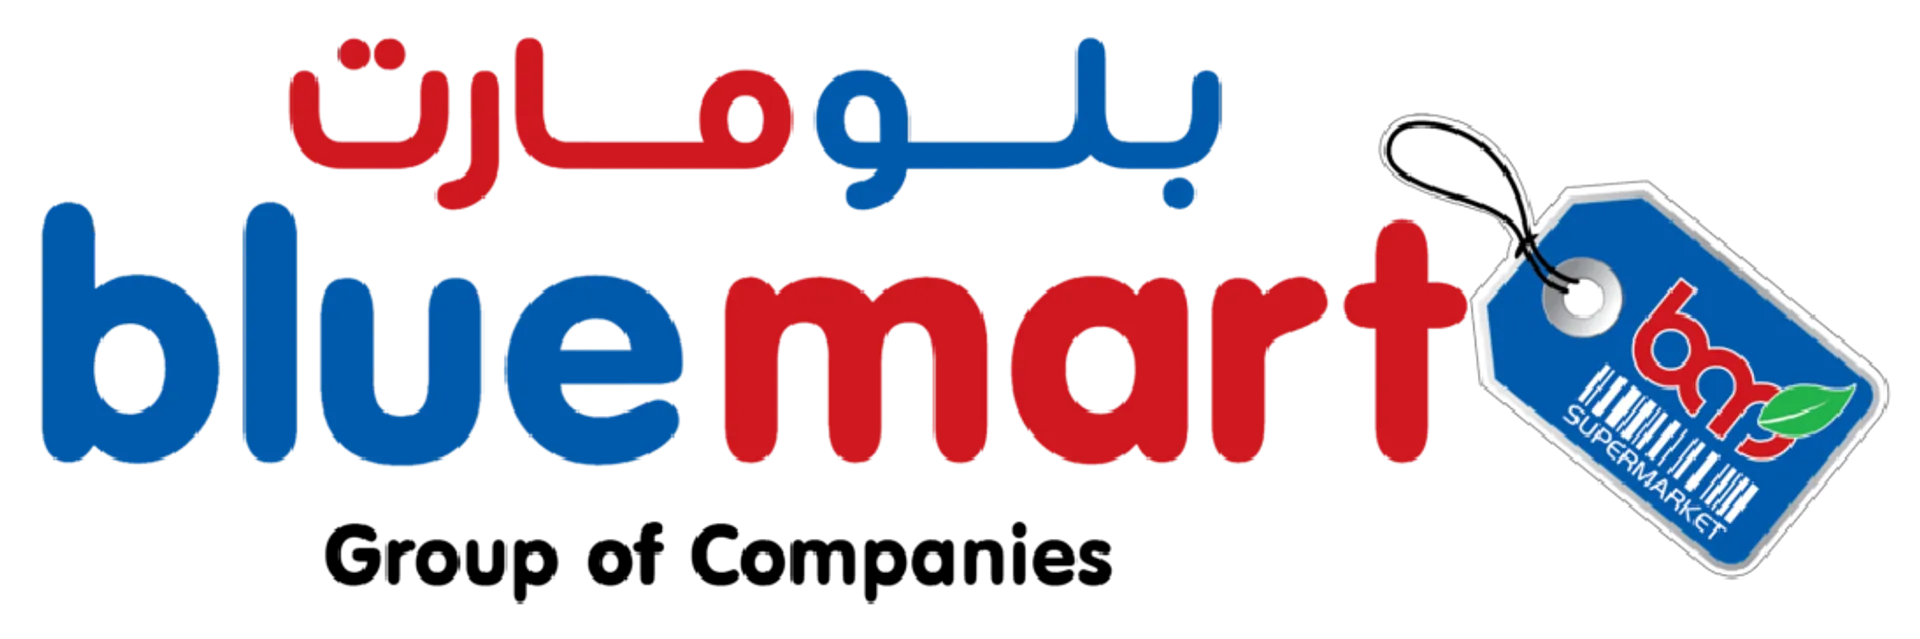 BLUEMART logo. Current catalogue